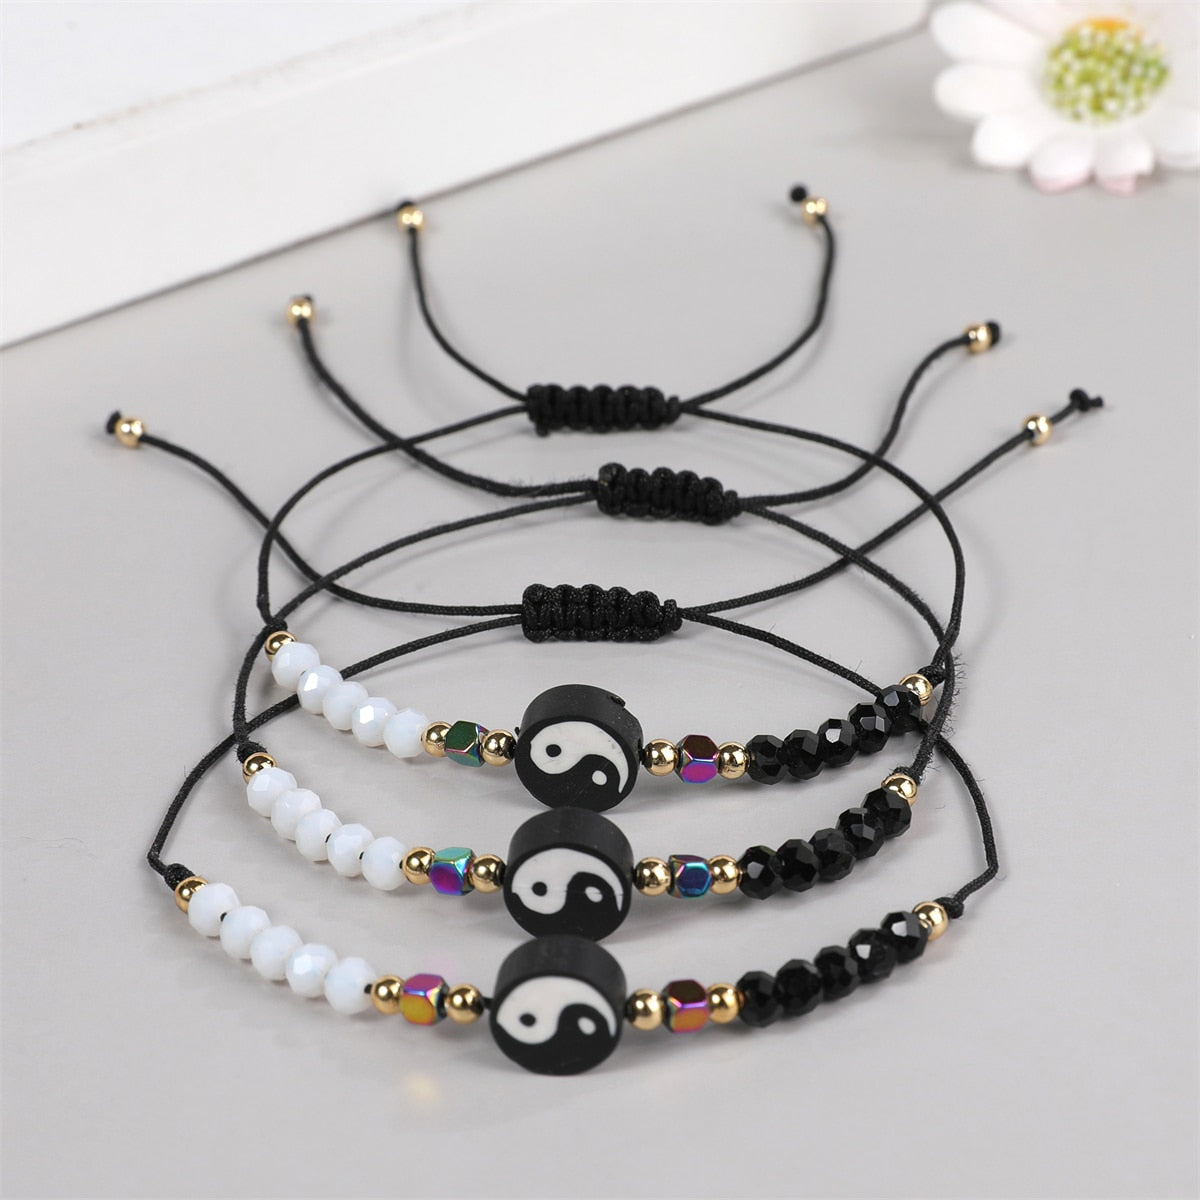 12pcs/lot Yin and Yang Tai Chi Clay Pendant Black/White Adjustable Wax Cord Beads Men Women Couple Bracelet Anklet Gift